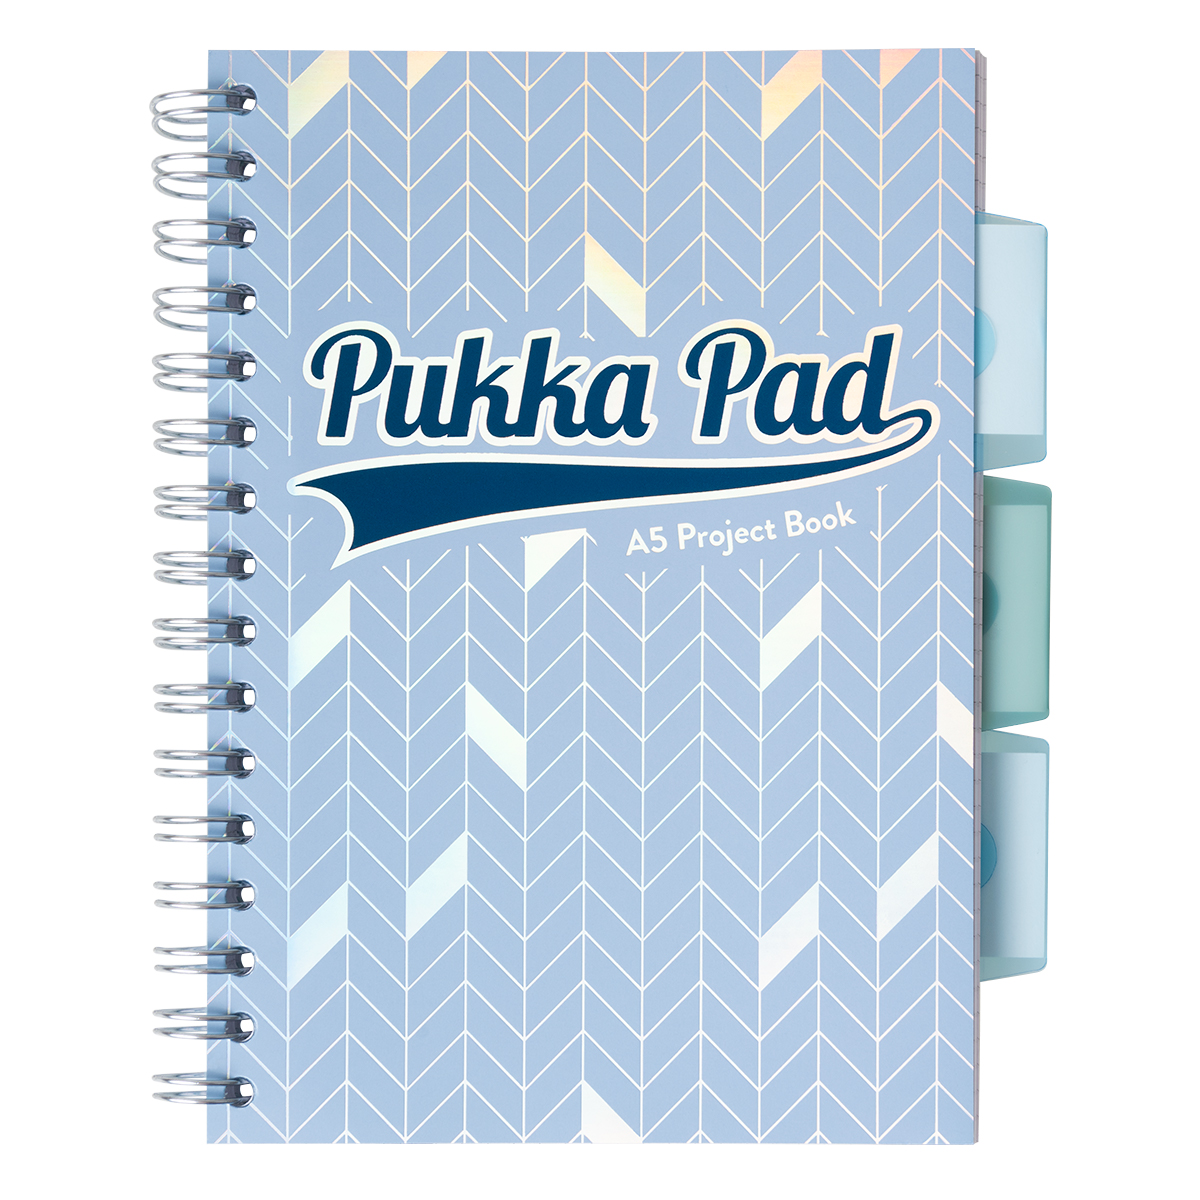 Caiet cu spirala si separatoare Pukka Pads Project Book Glee 200 pag matematica A5 albastru deschis